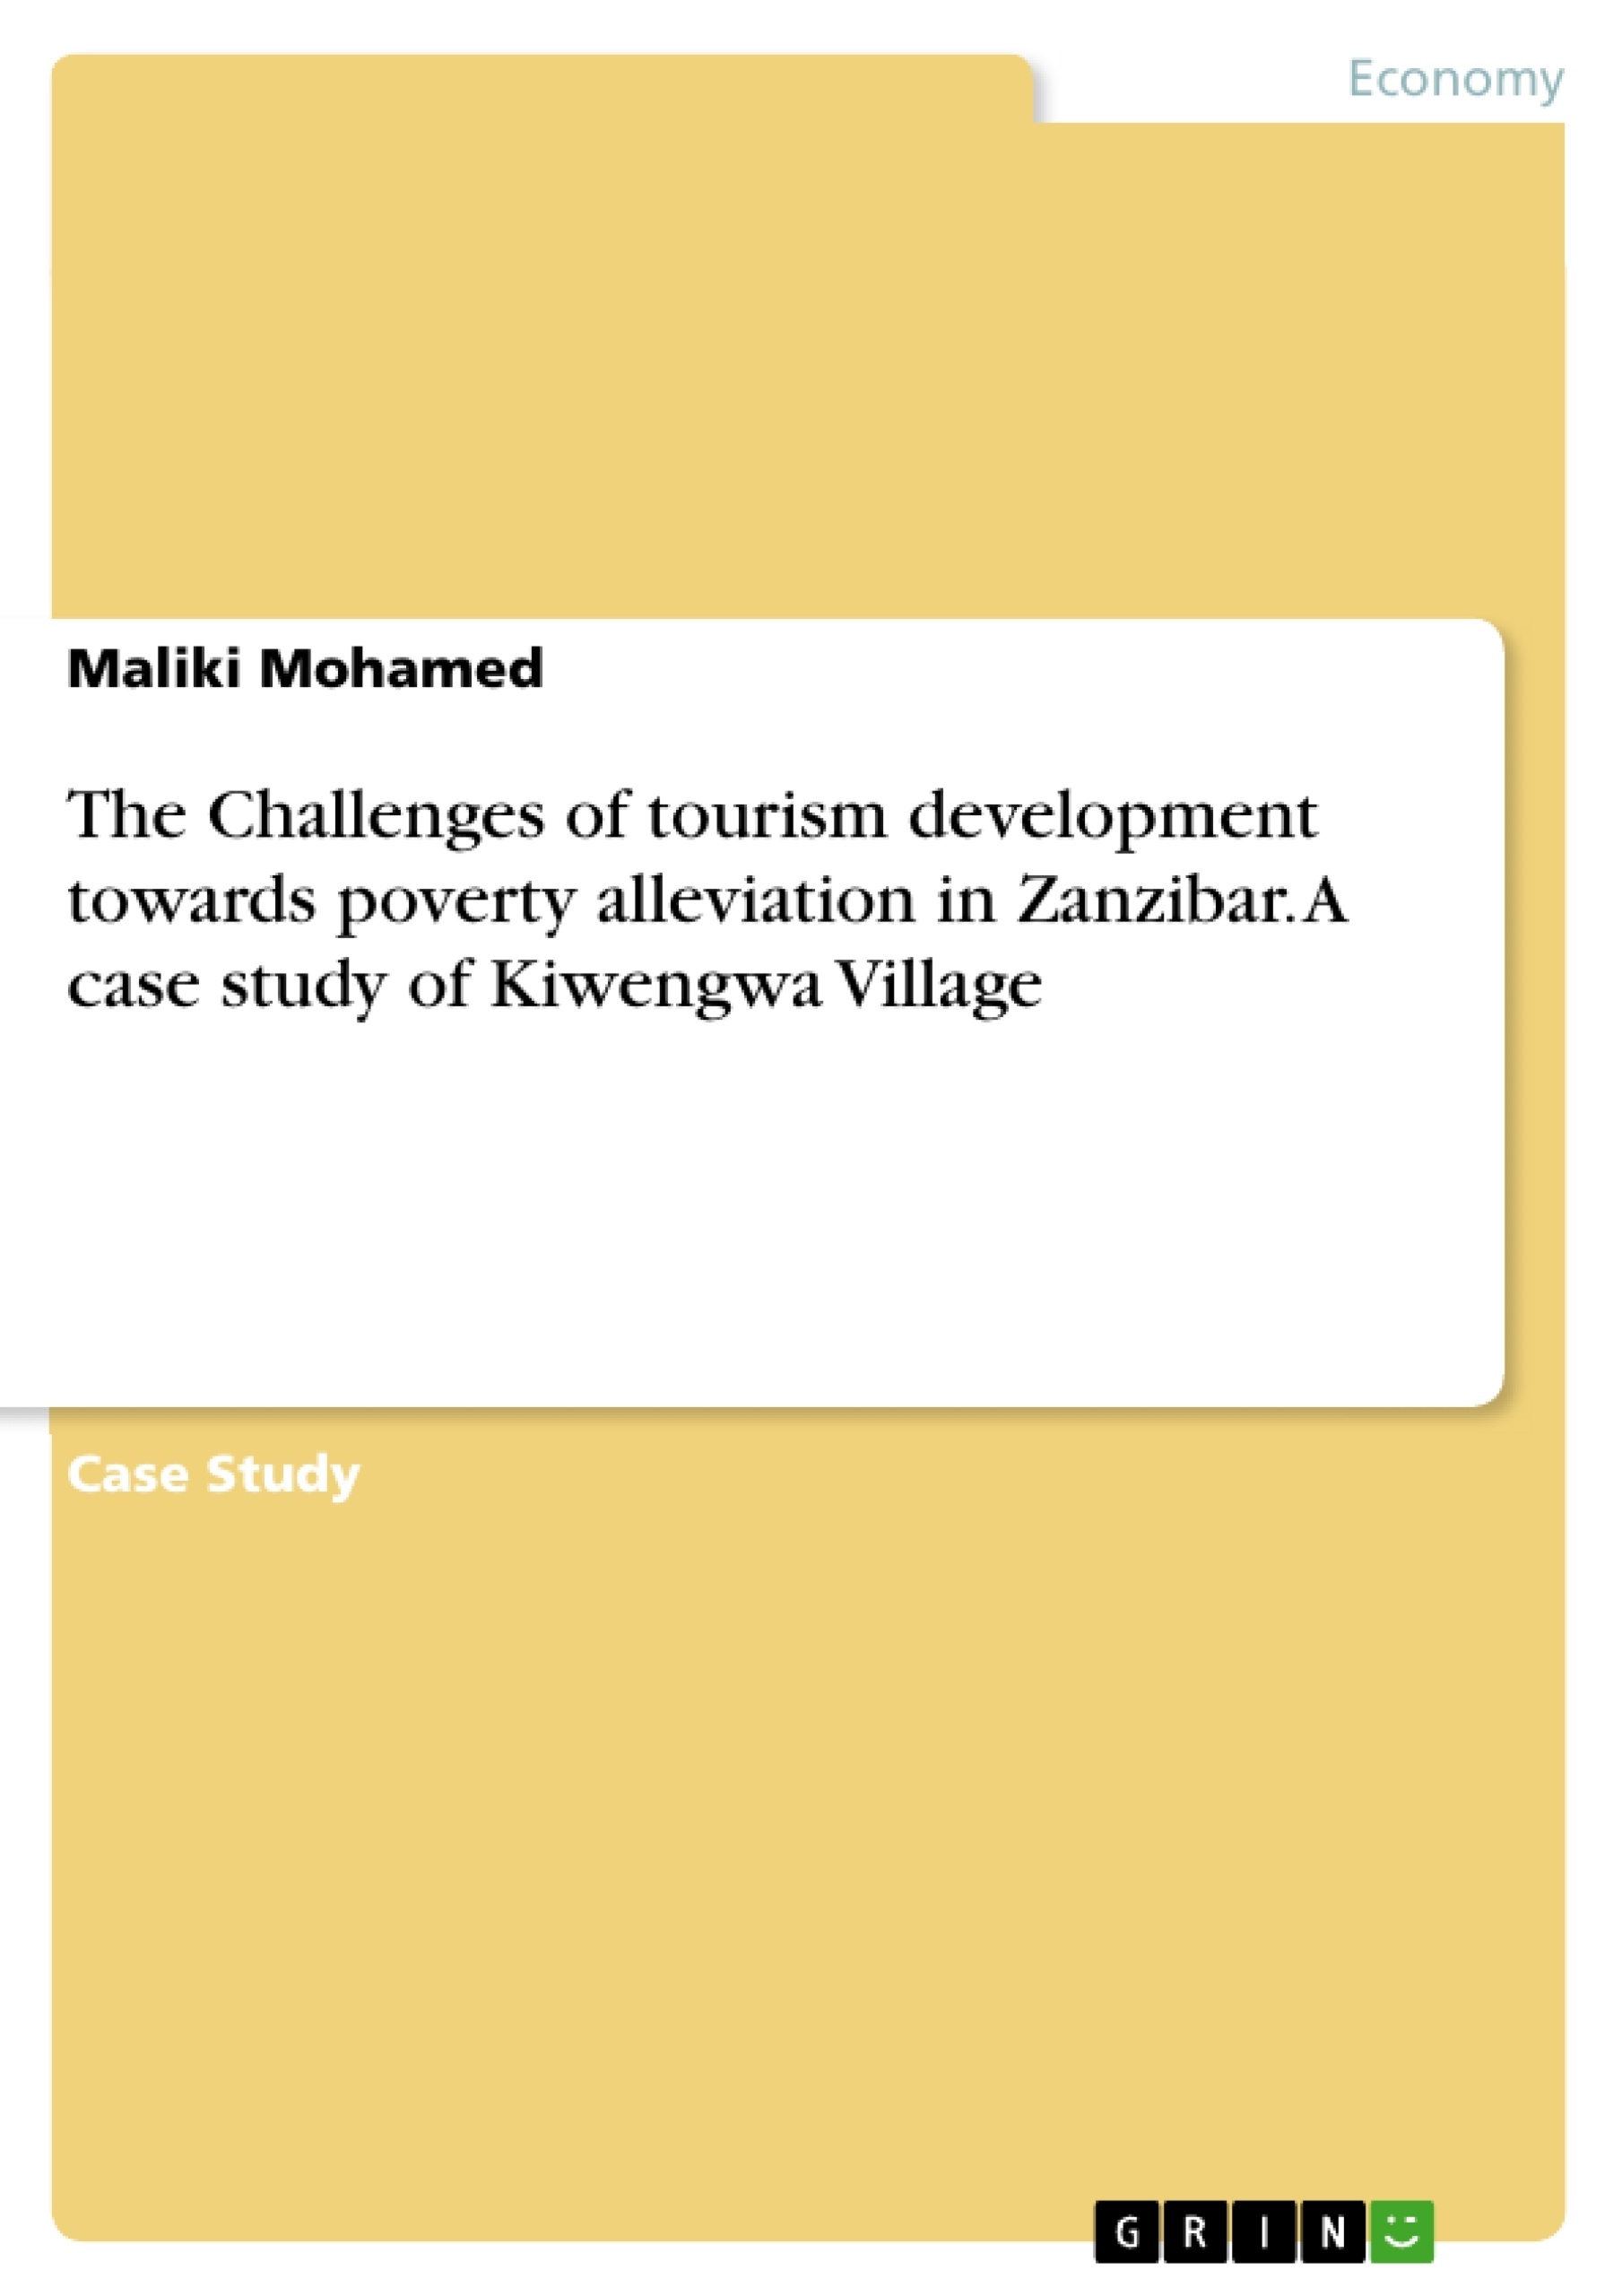 Title: The Challenges of tourism development towards poverty alleviation in Zanzibar. A case study of Kiwengwa Village